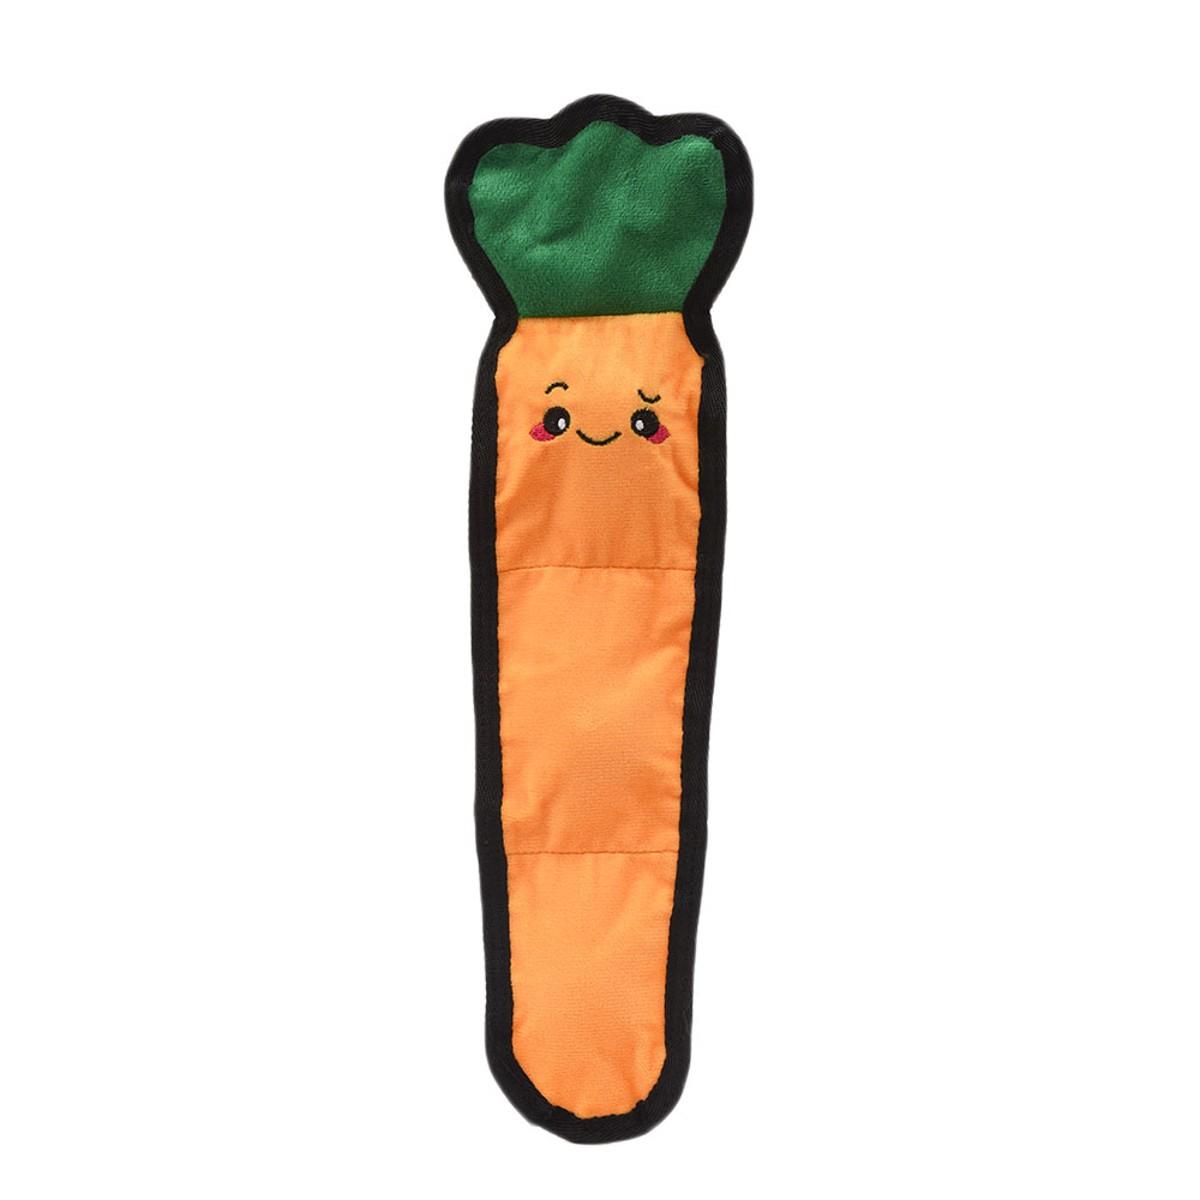 HugSmart Squeakin’ Vegetables Dog Toy – Carrot